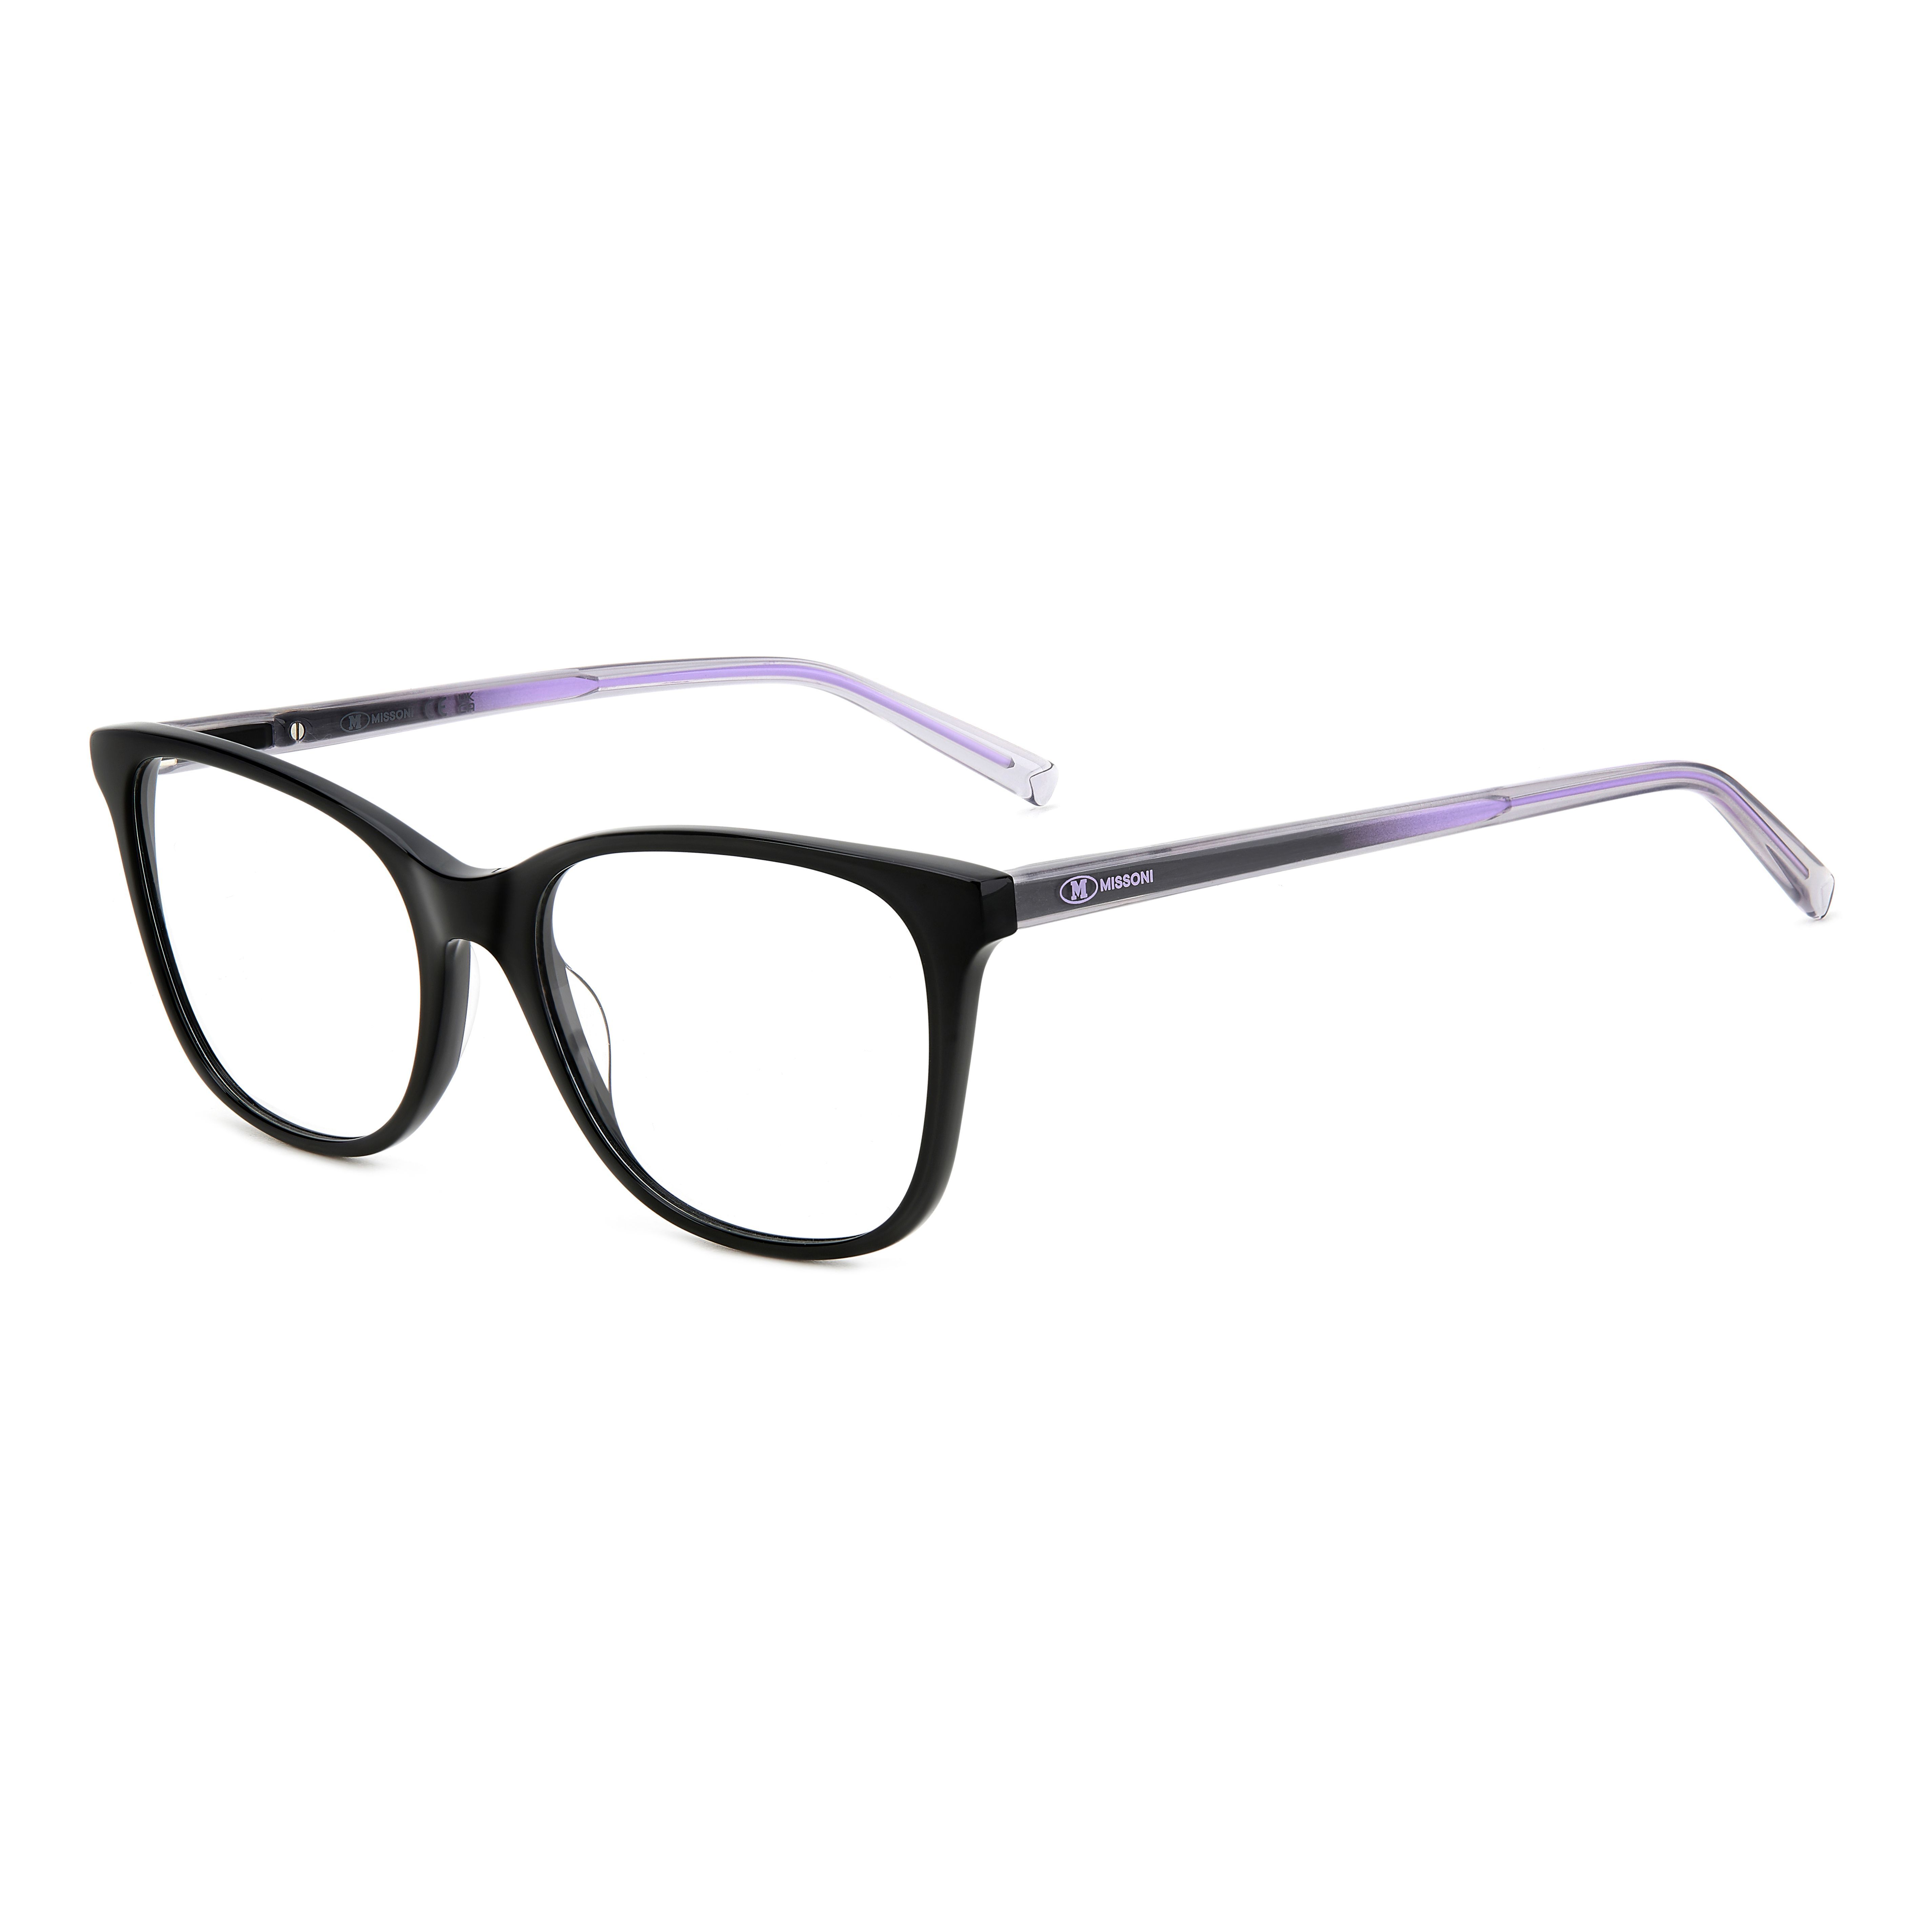 MMI 0183 Pillow Eyeglasses 807 - size 53